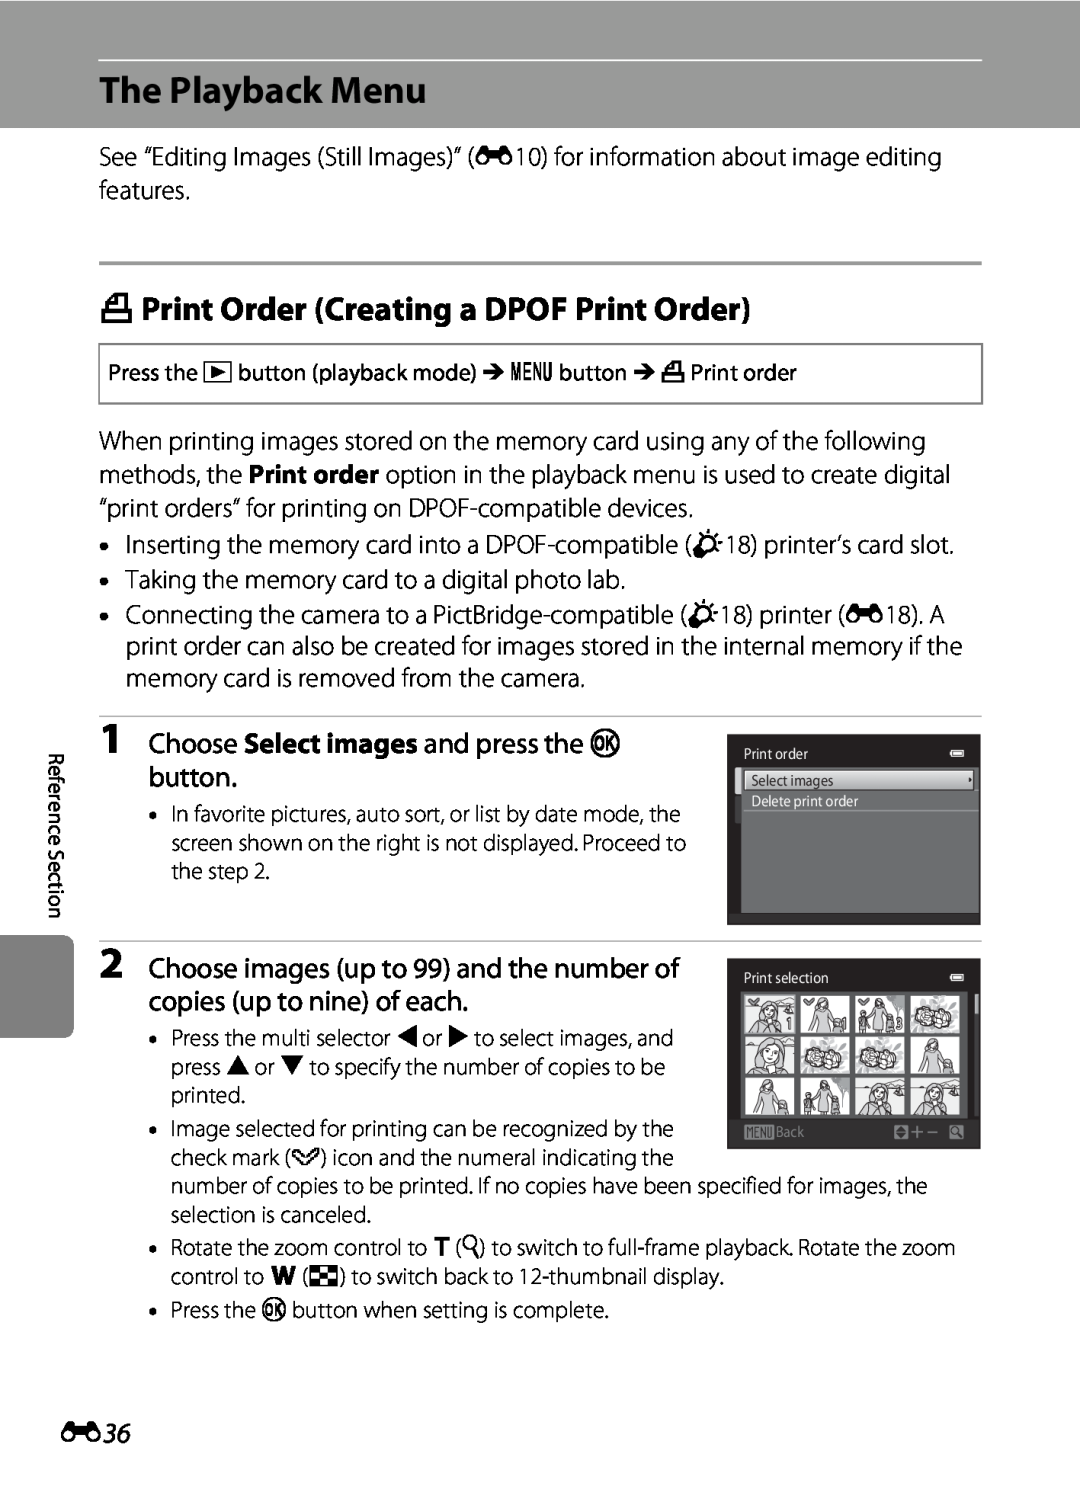 Nikon S2600 manual The Playback Menu, aPrint Order Creating a DPOF Print Order, Choose Select images and press the k button 